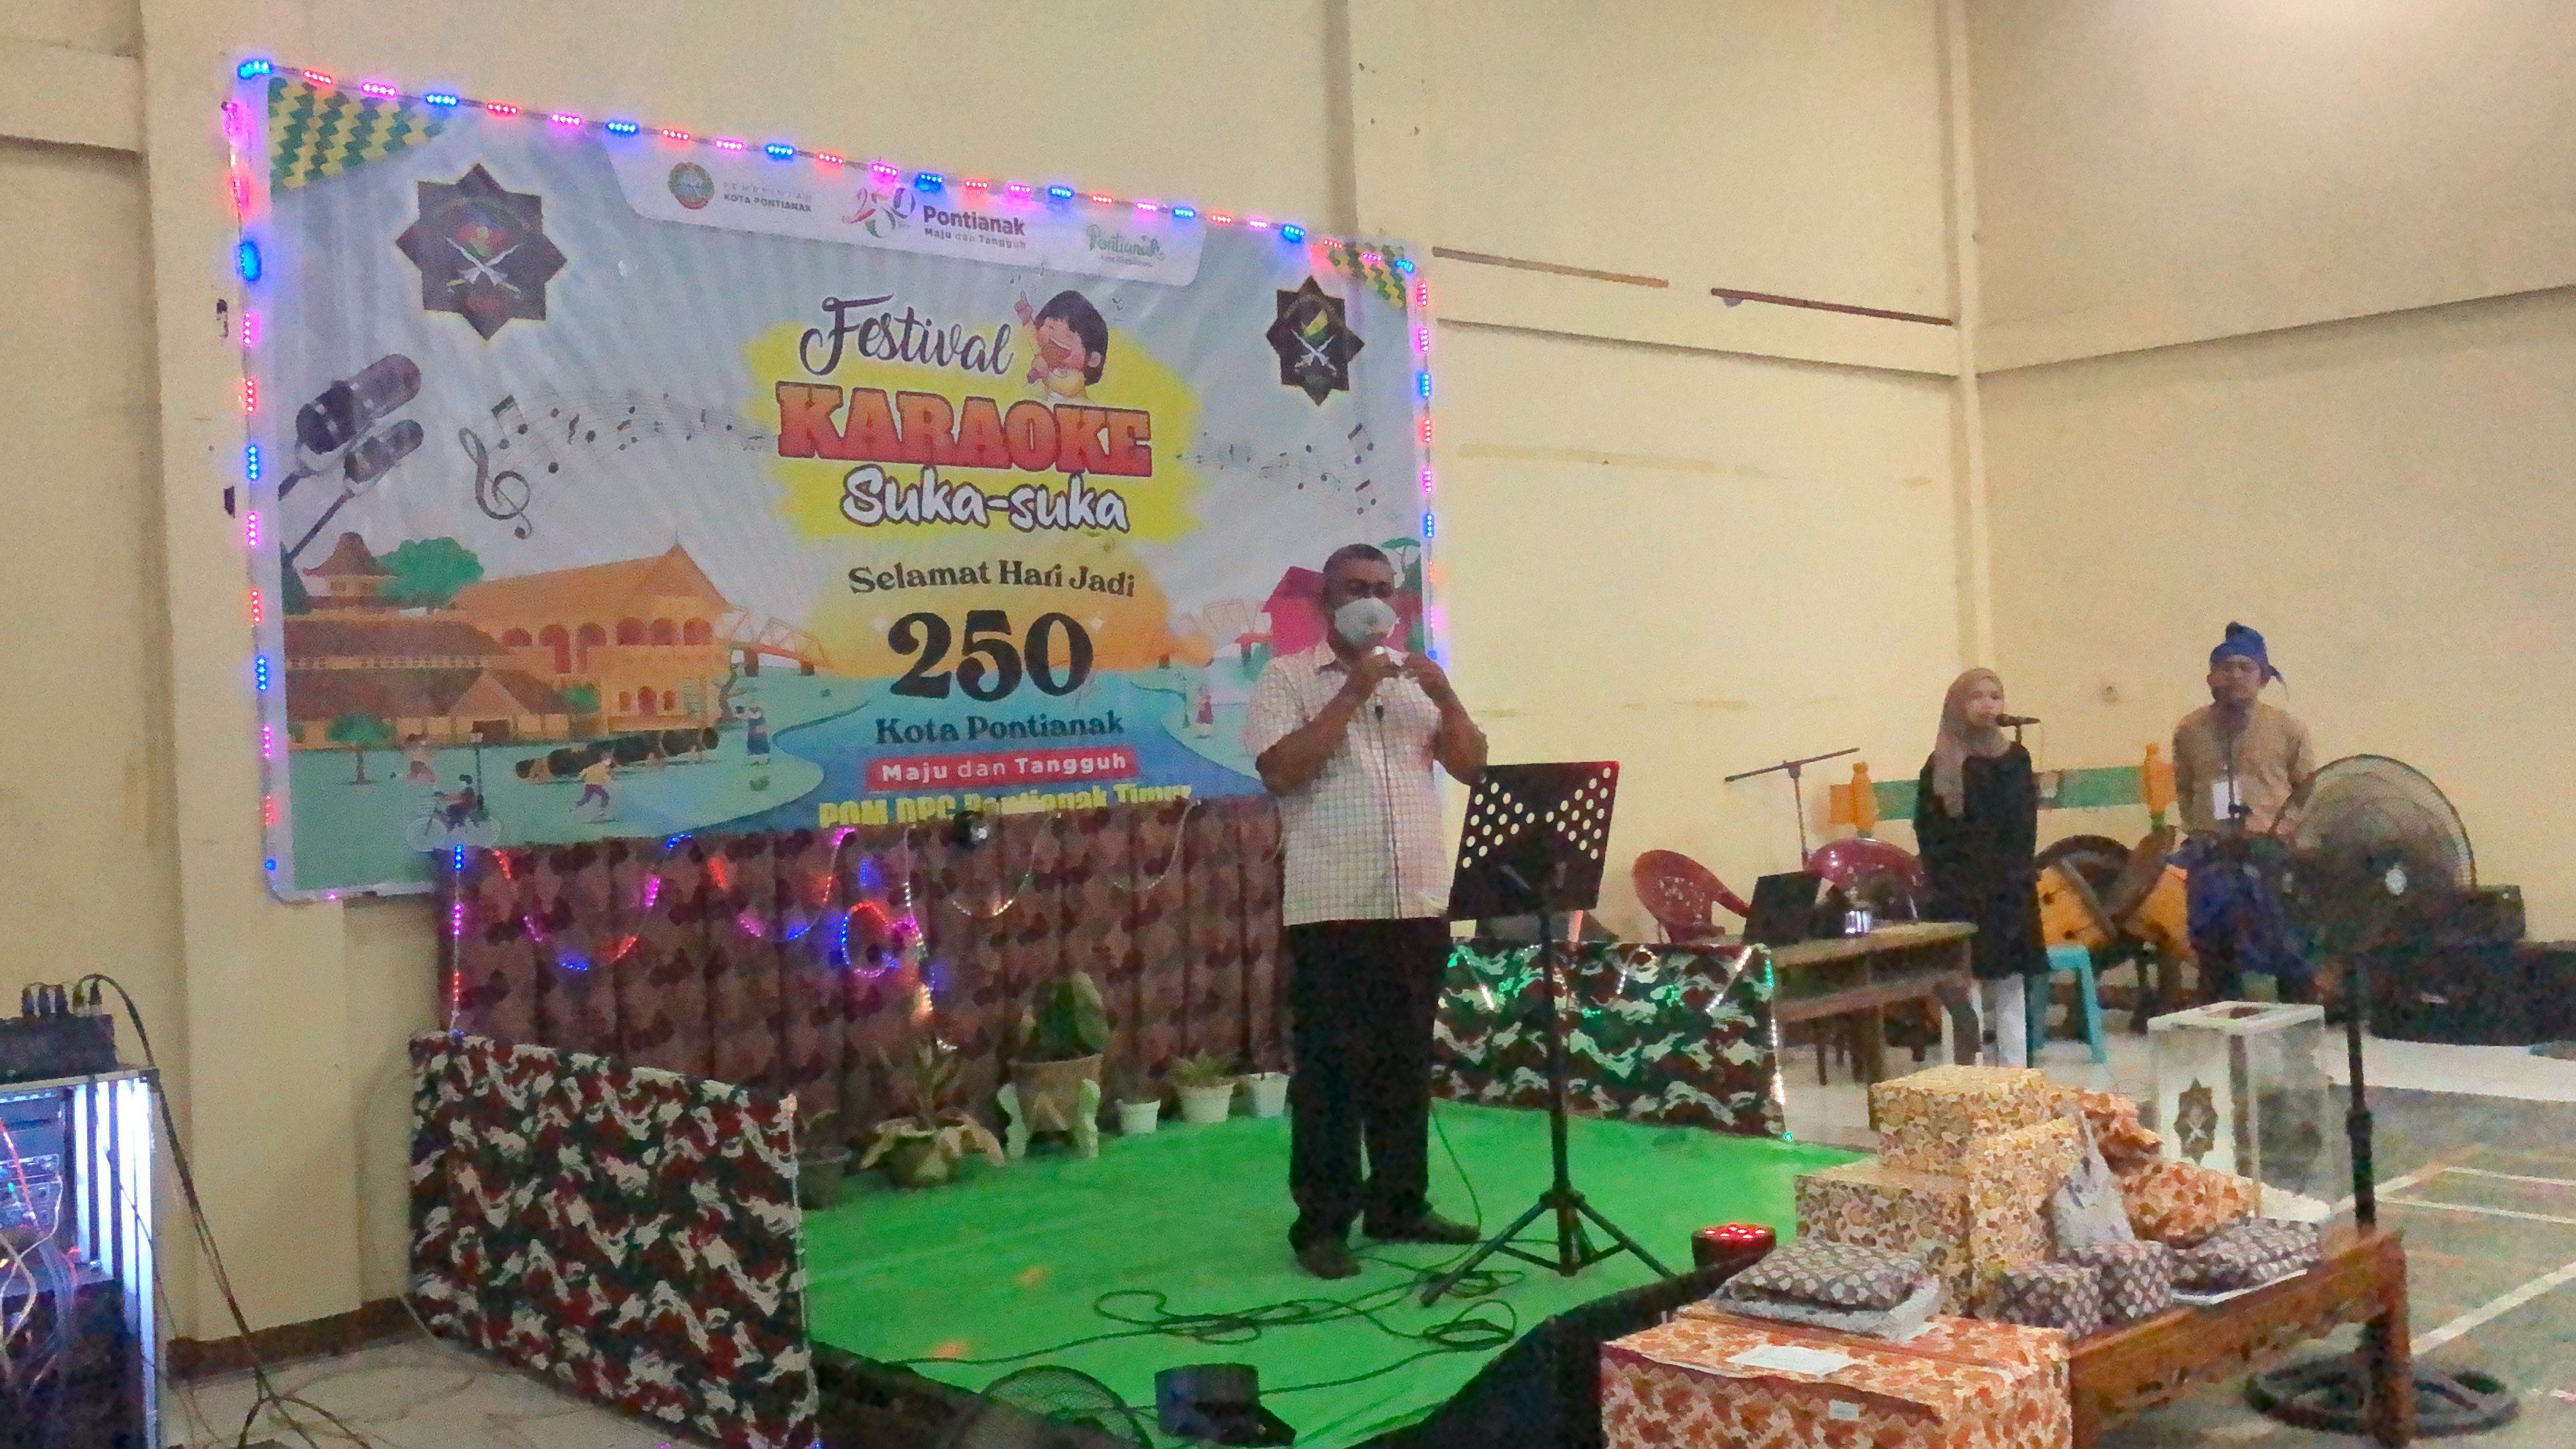 Kegiatan Karaoke Suka-Suka Dalam Rangka Memperingati Ulang Tahun Pontianak yg ke-250 di Gedung Serbaguna Kelurahan Banjar-Serasan